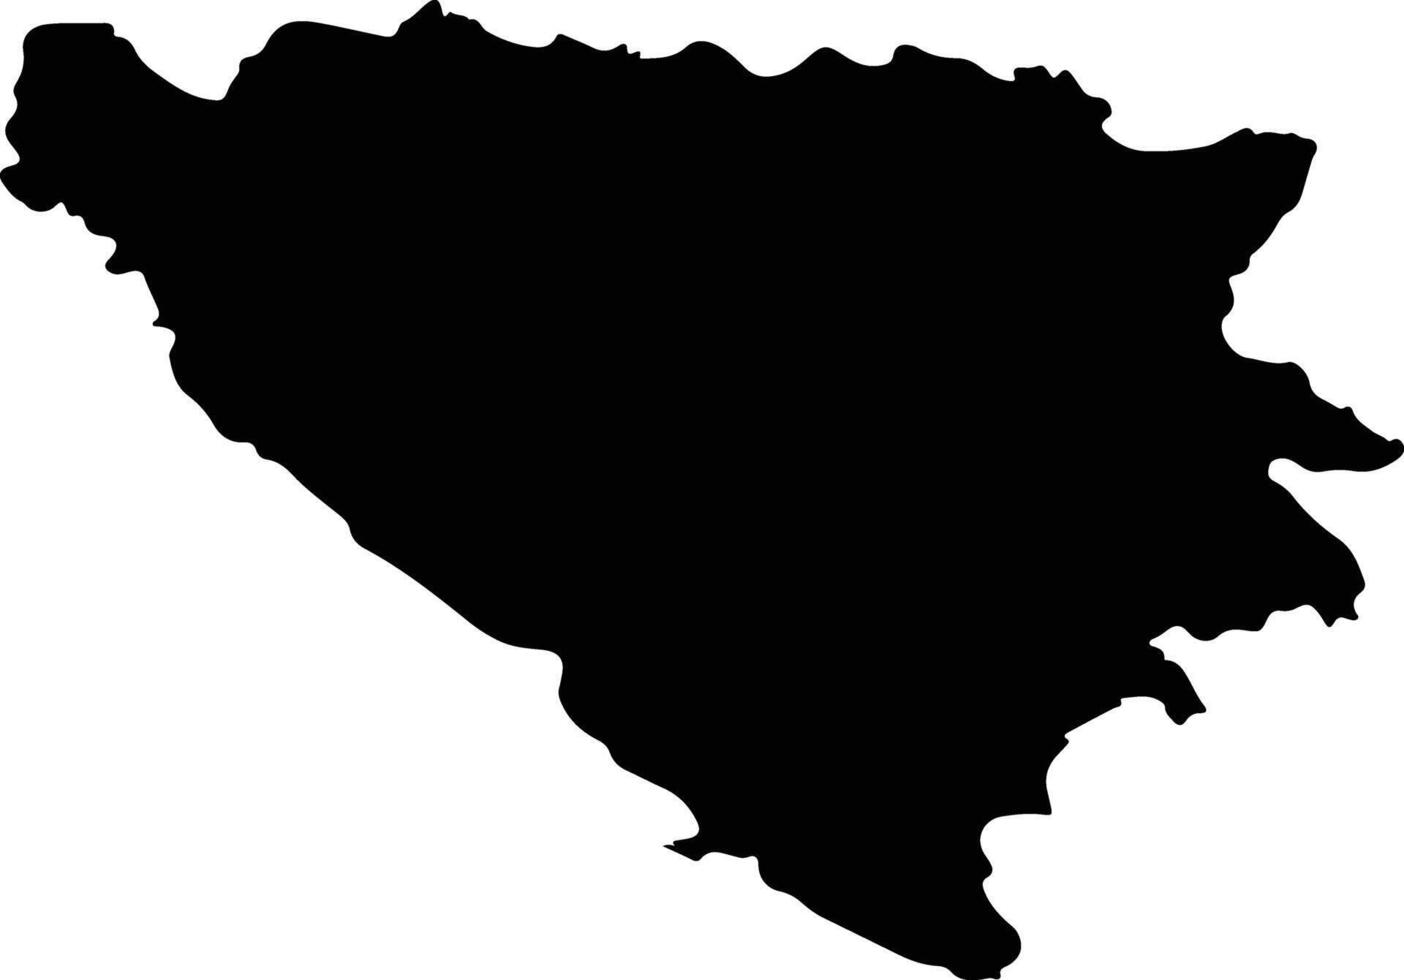 Bosnia and Herzegovina silhouette map vector